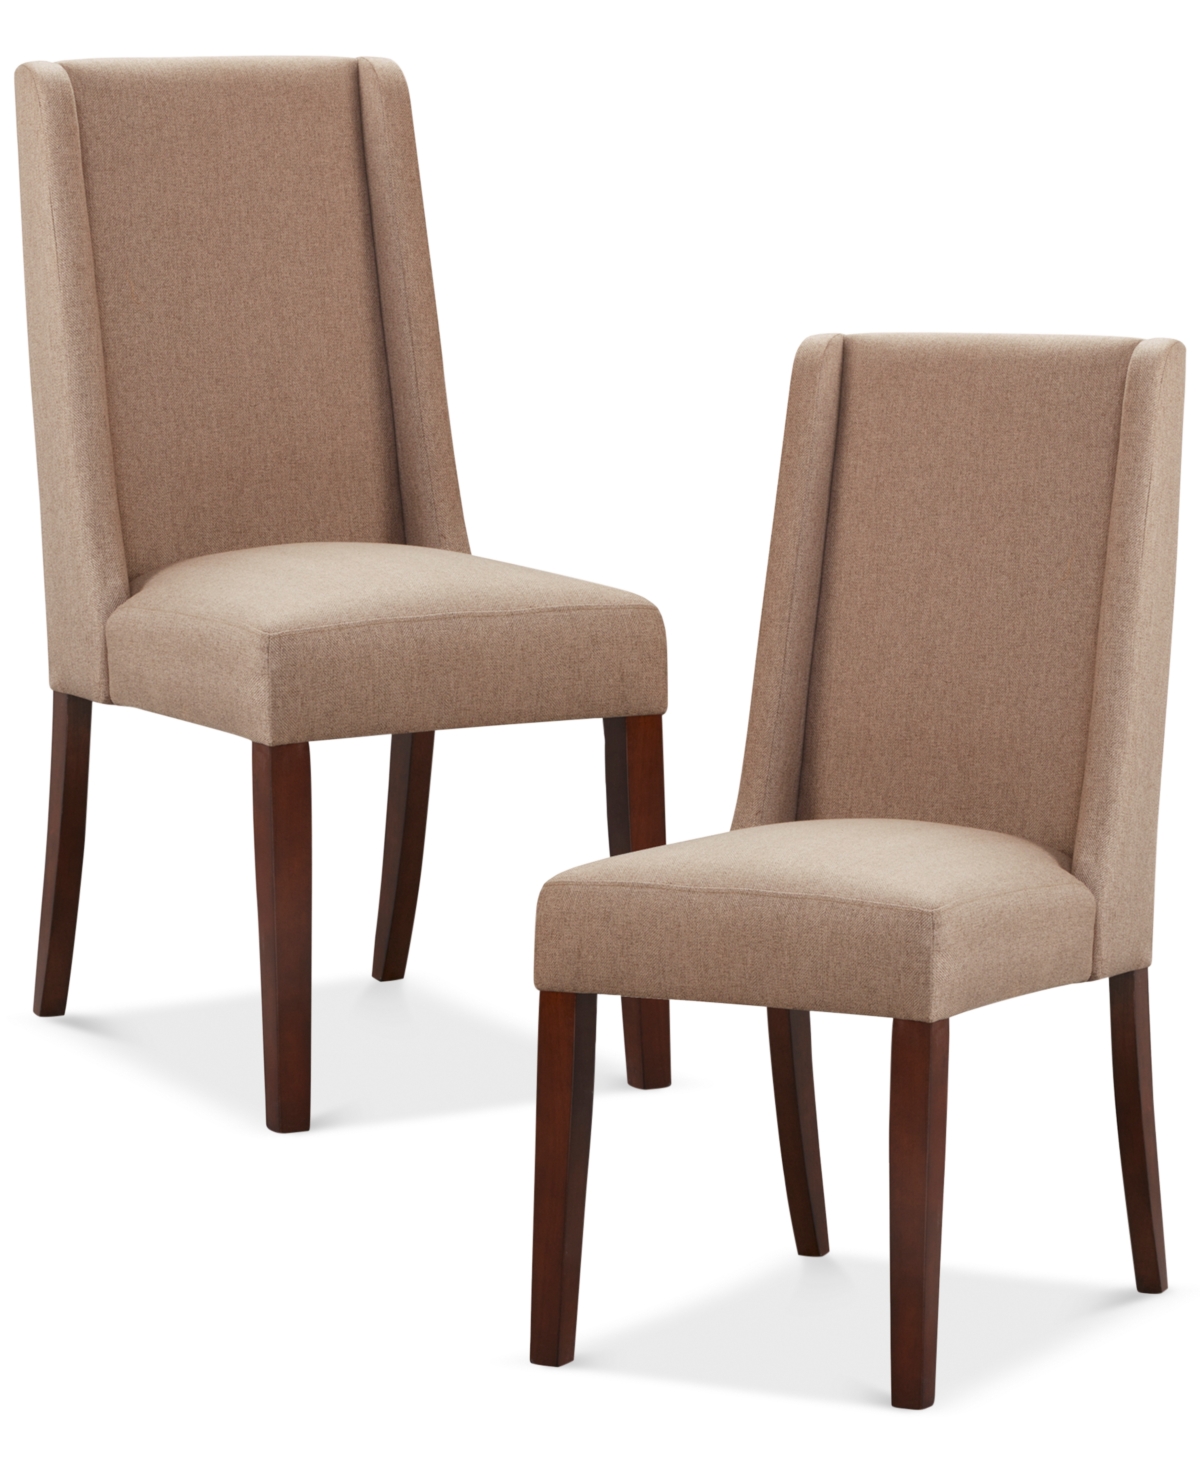 Benicio Set of 2 Dining Chairs